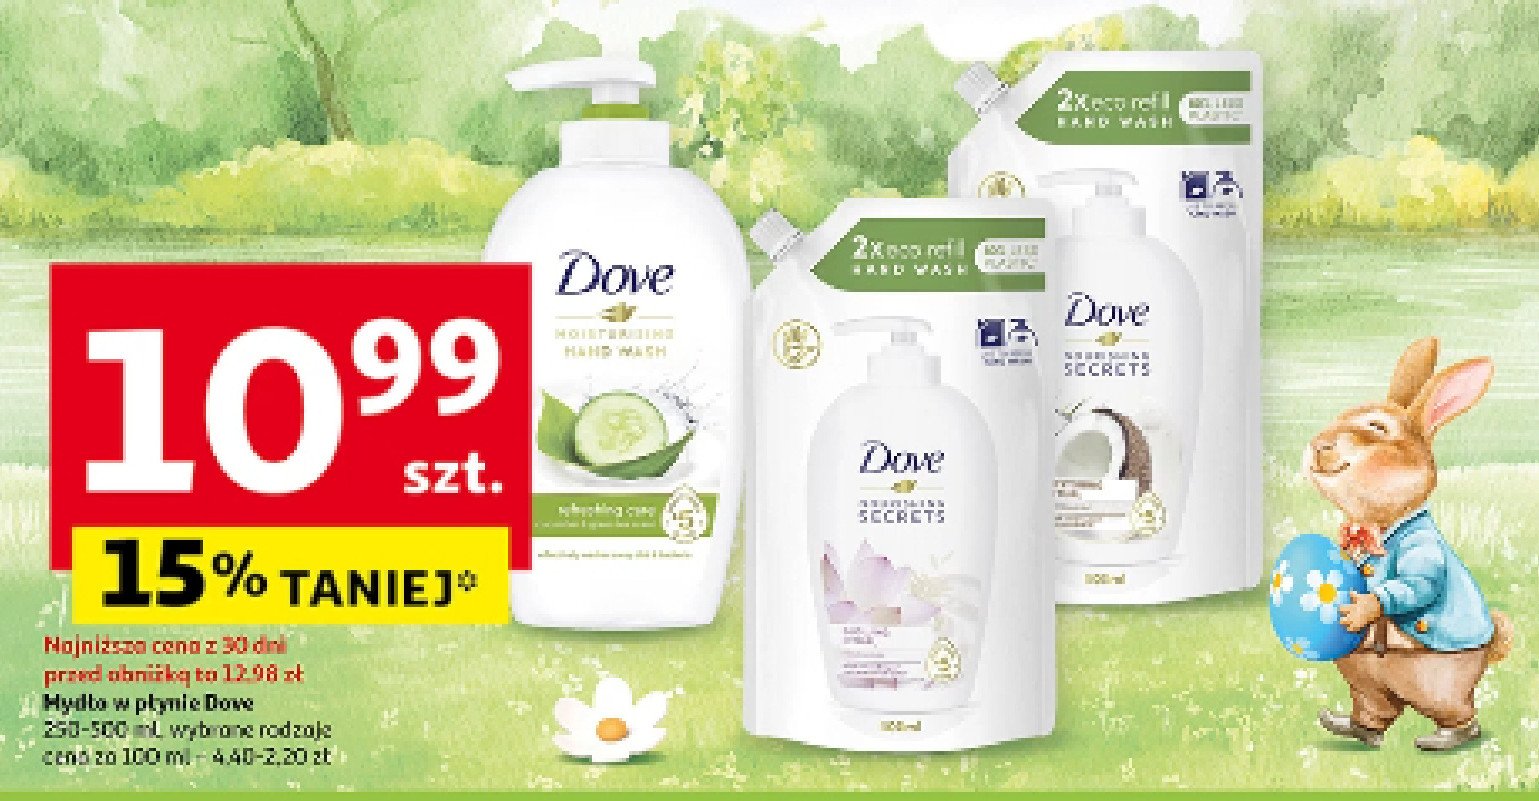 Mydło w płynie cucumber and green tea scent Dove caring hand wash promocja